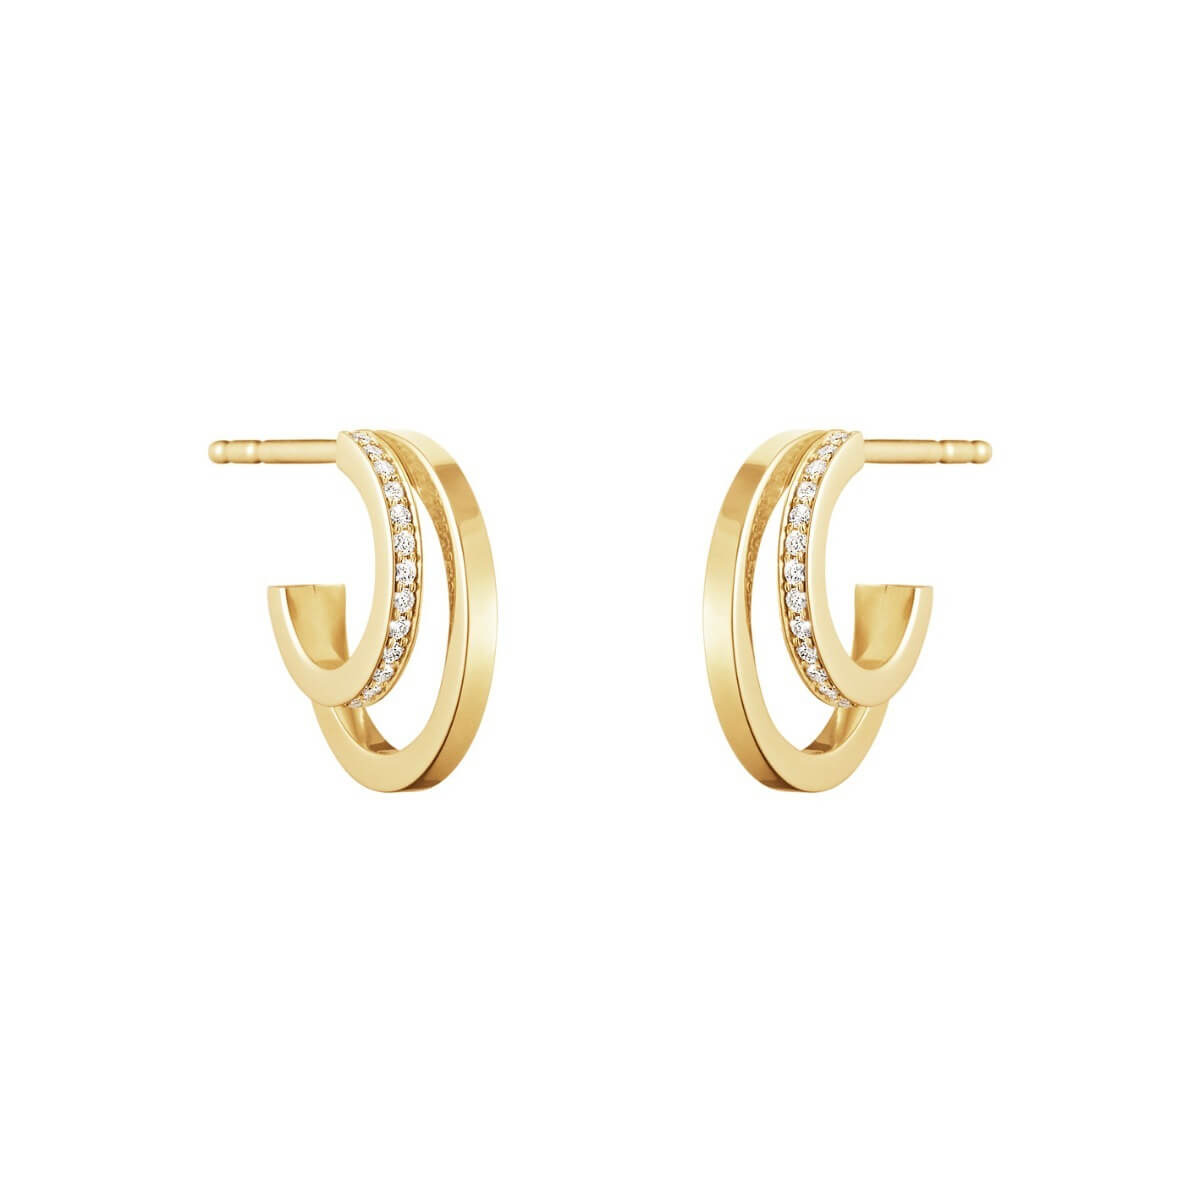 georg jensen halo hoop earrings 18ct yellow gold with diamond set hoop 10014064